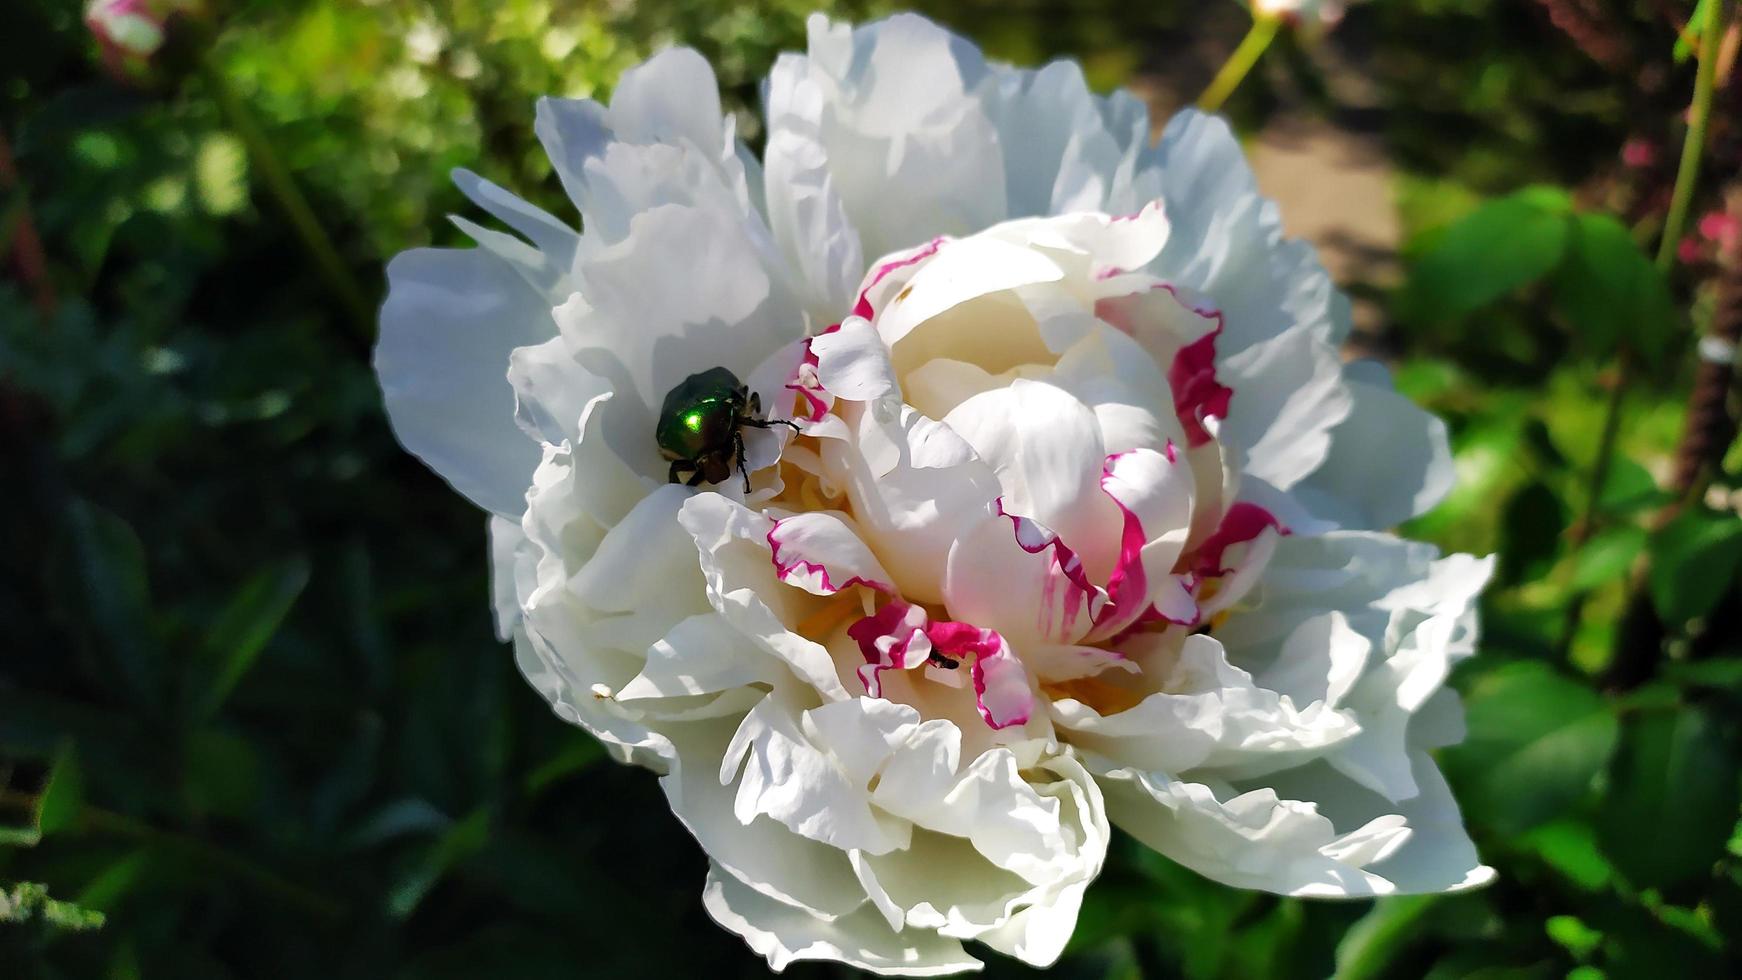 Beetles in a peony flower bud photo